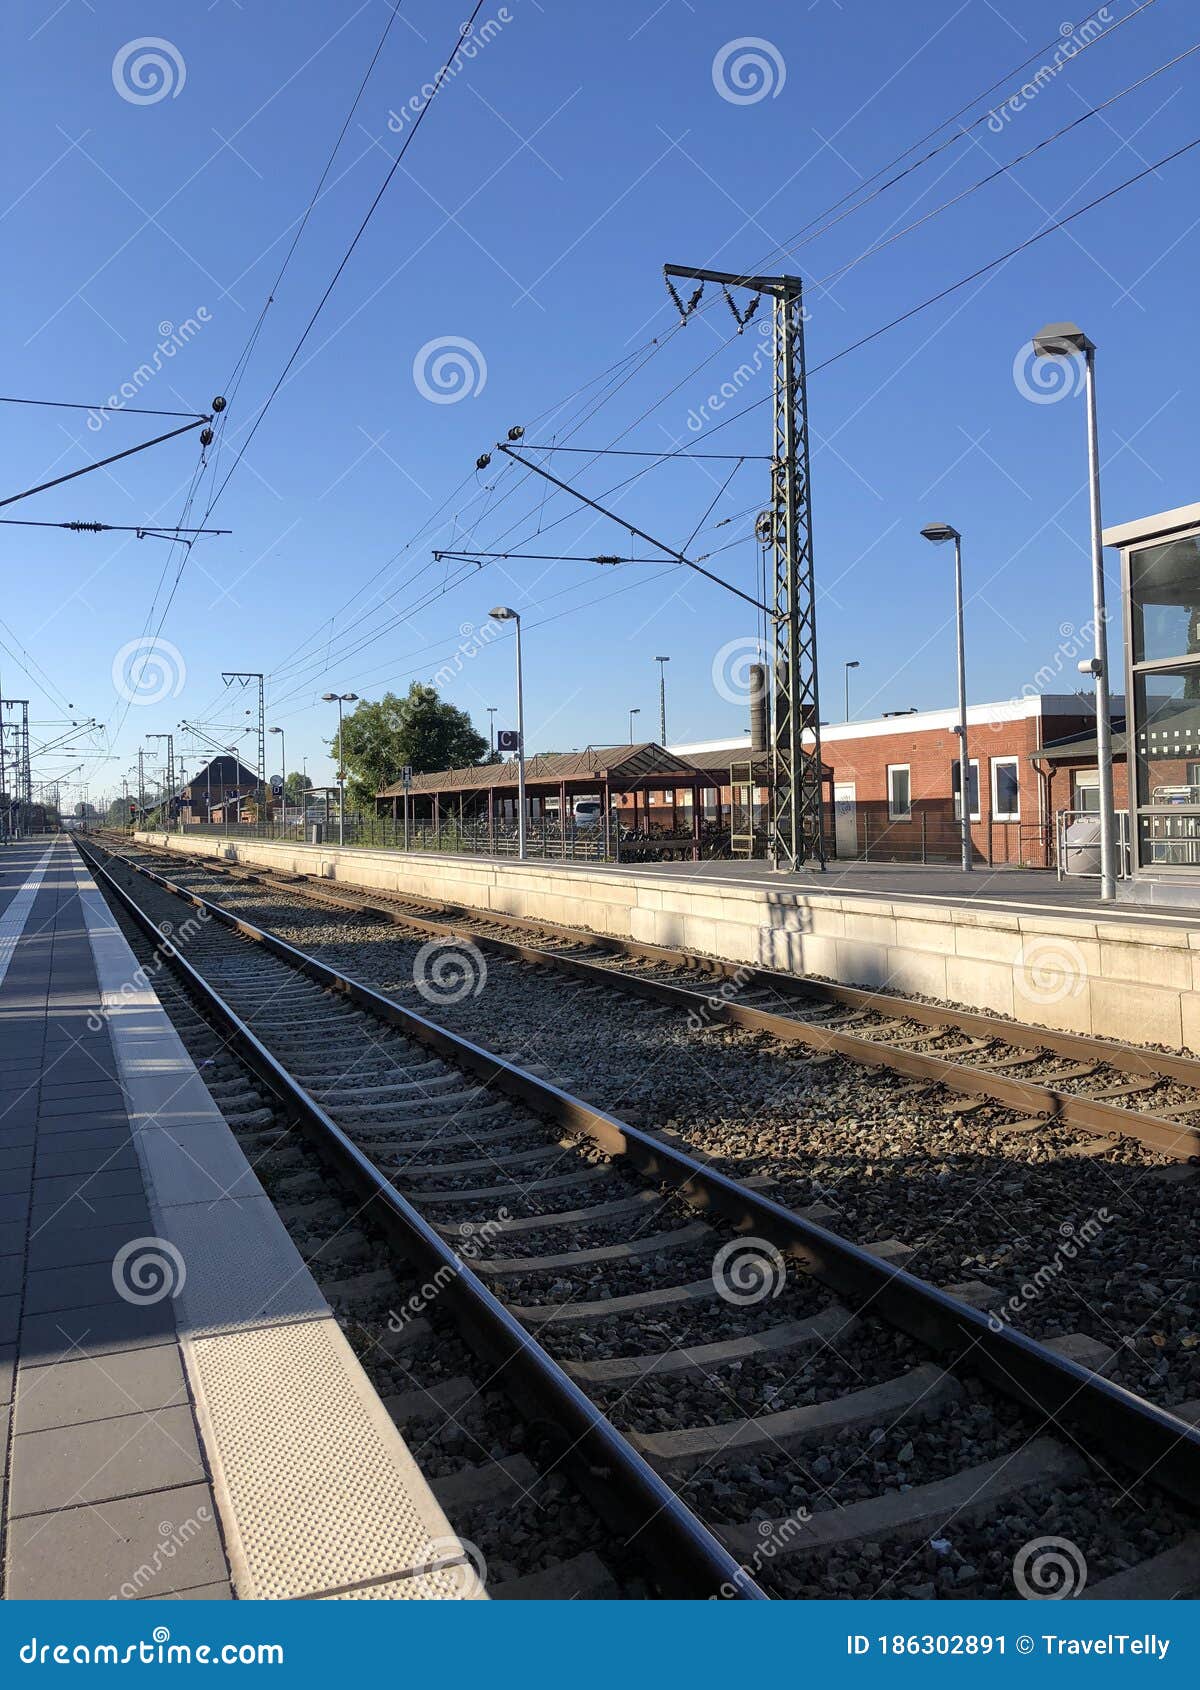 leer (ostfriesl) railway station